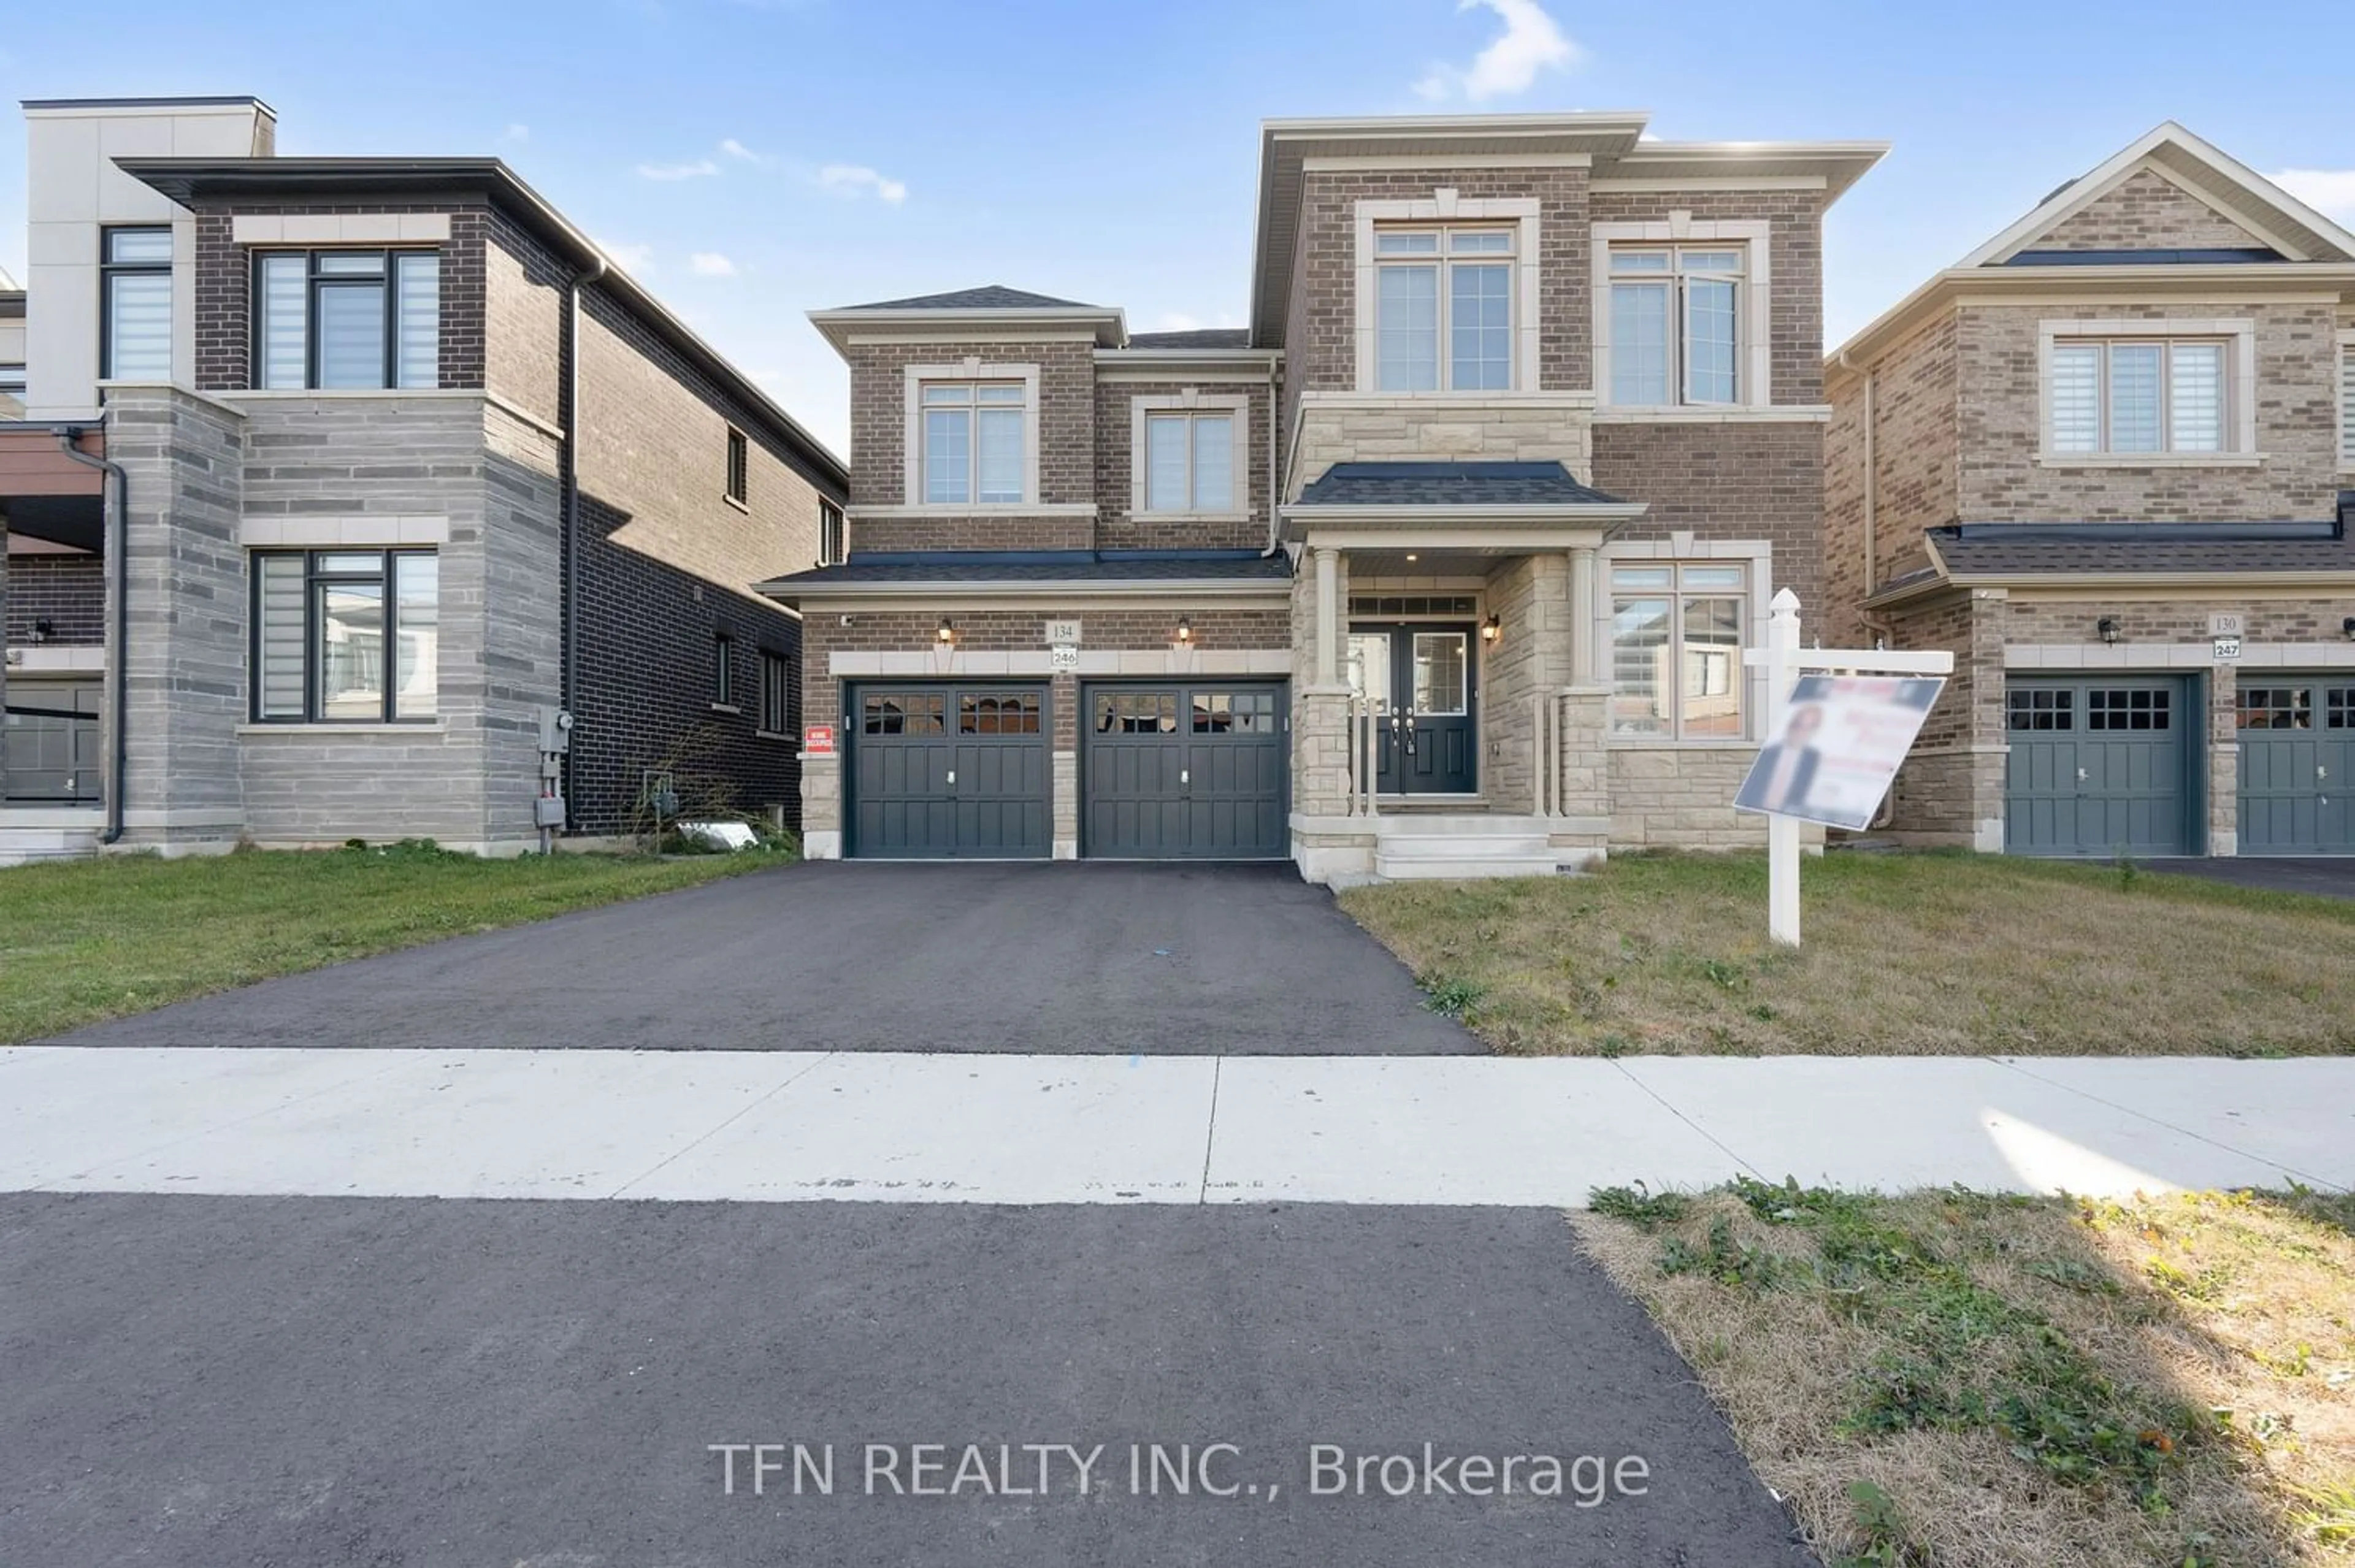 Home with brick exterior material for 134 Granite Ridge Tr, Hamilton Ontario L0R 2H7